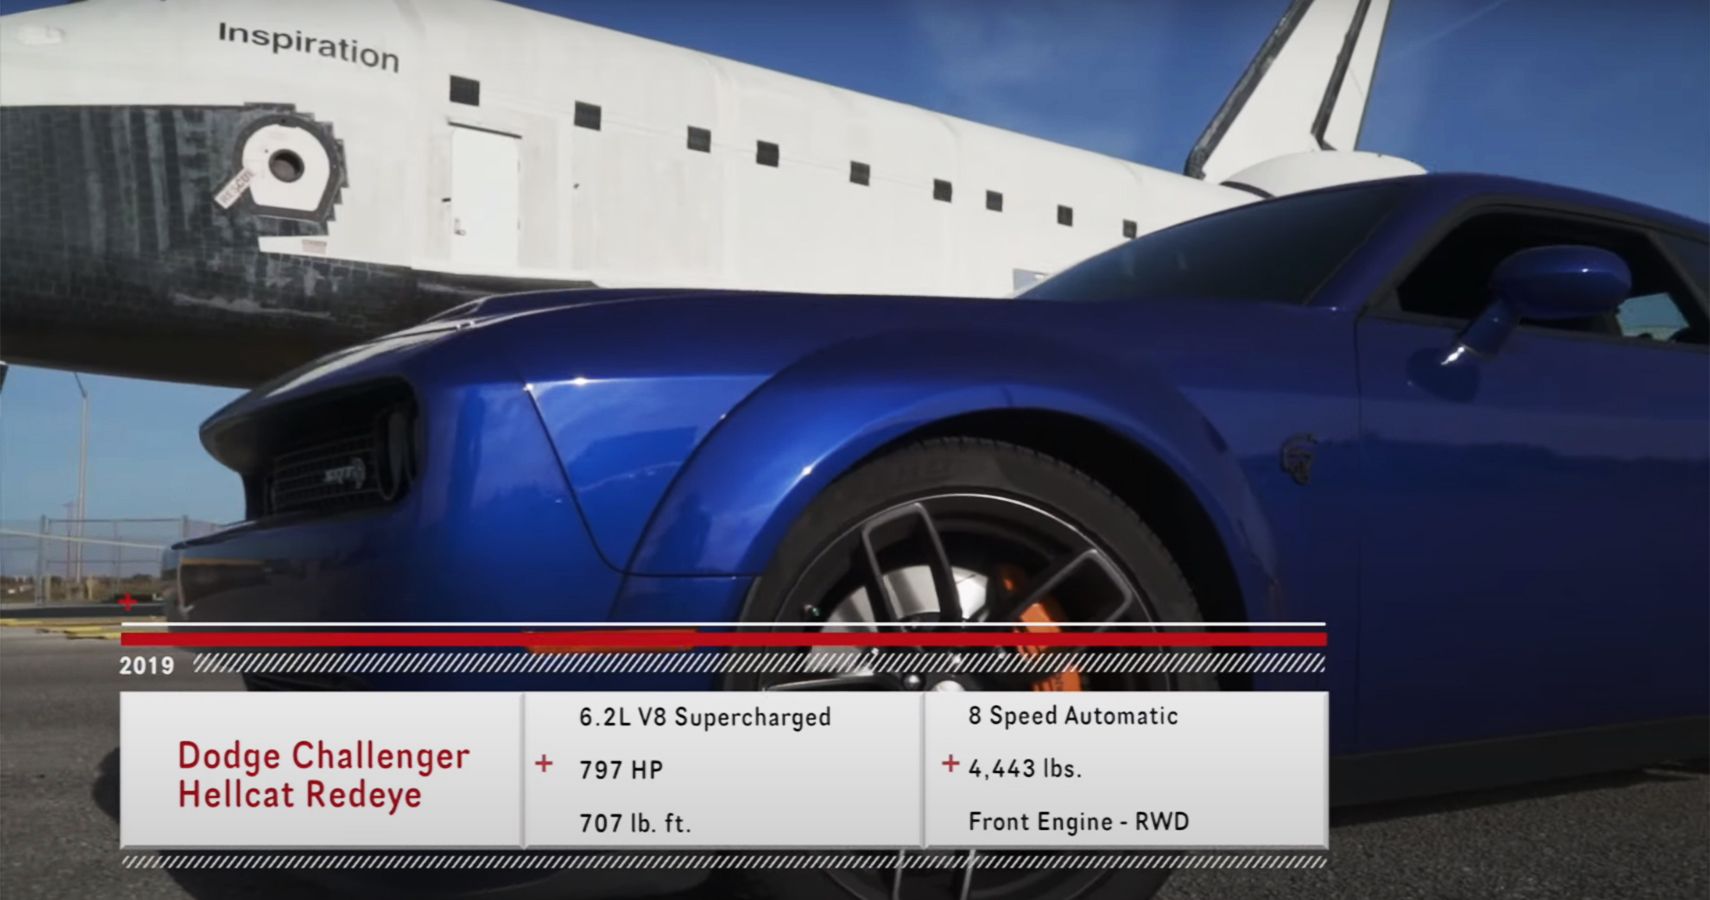 2019 Dodge Challenger SRT Hellcat description